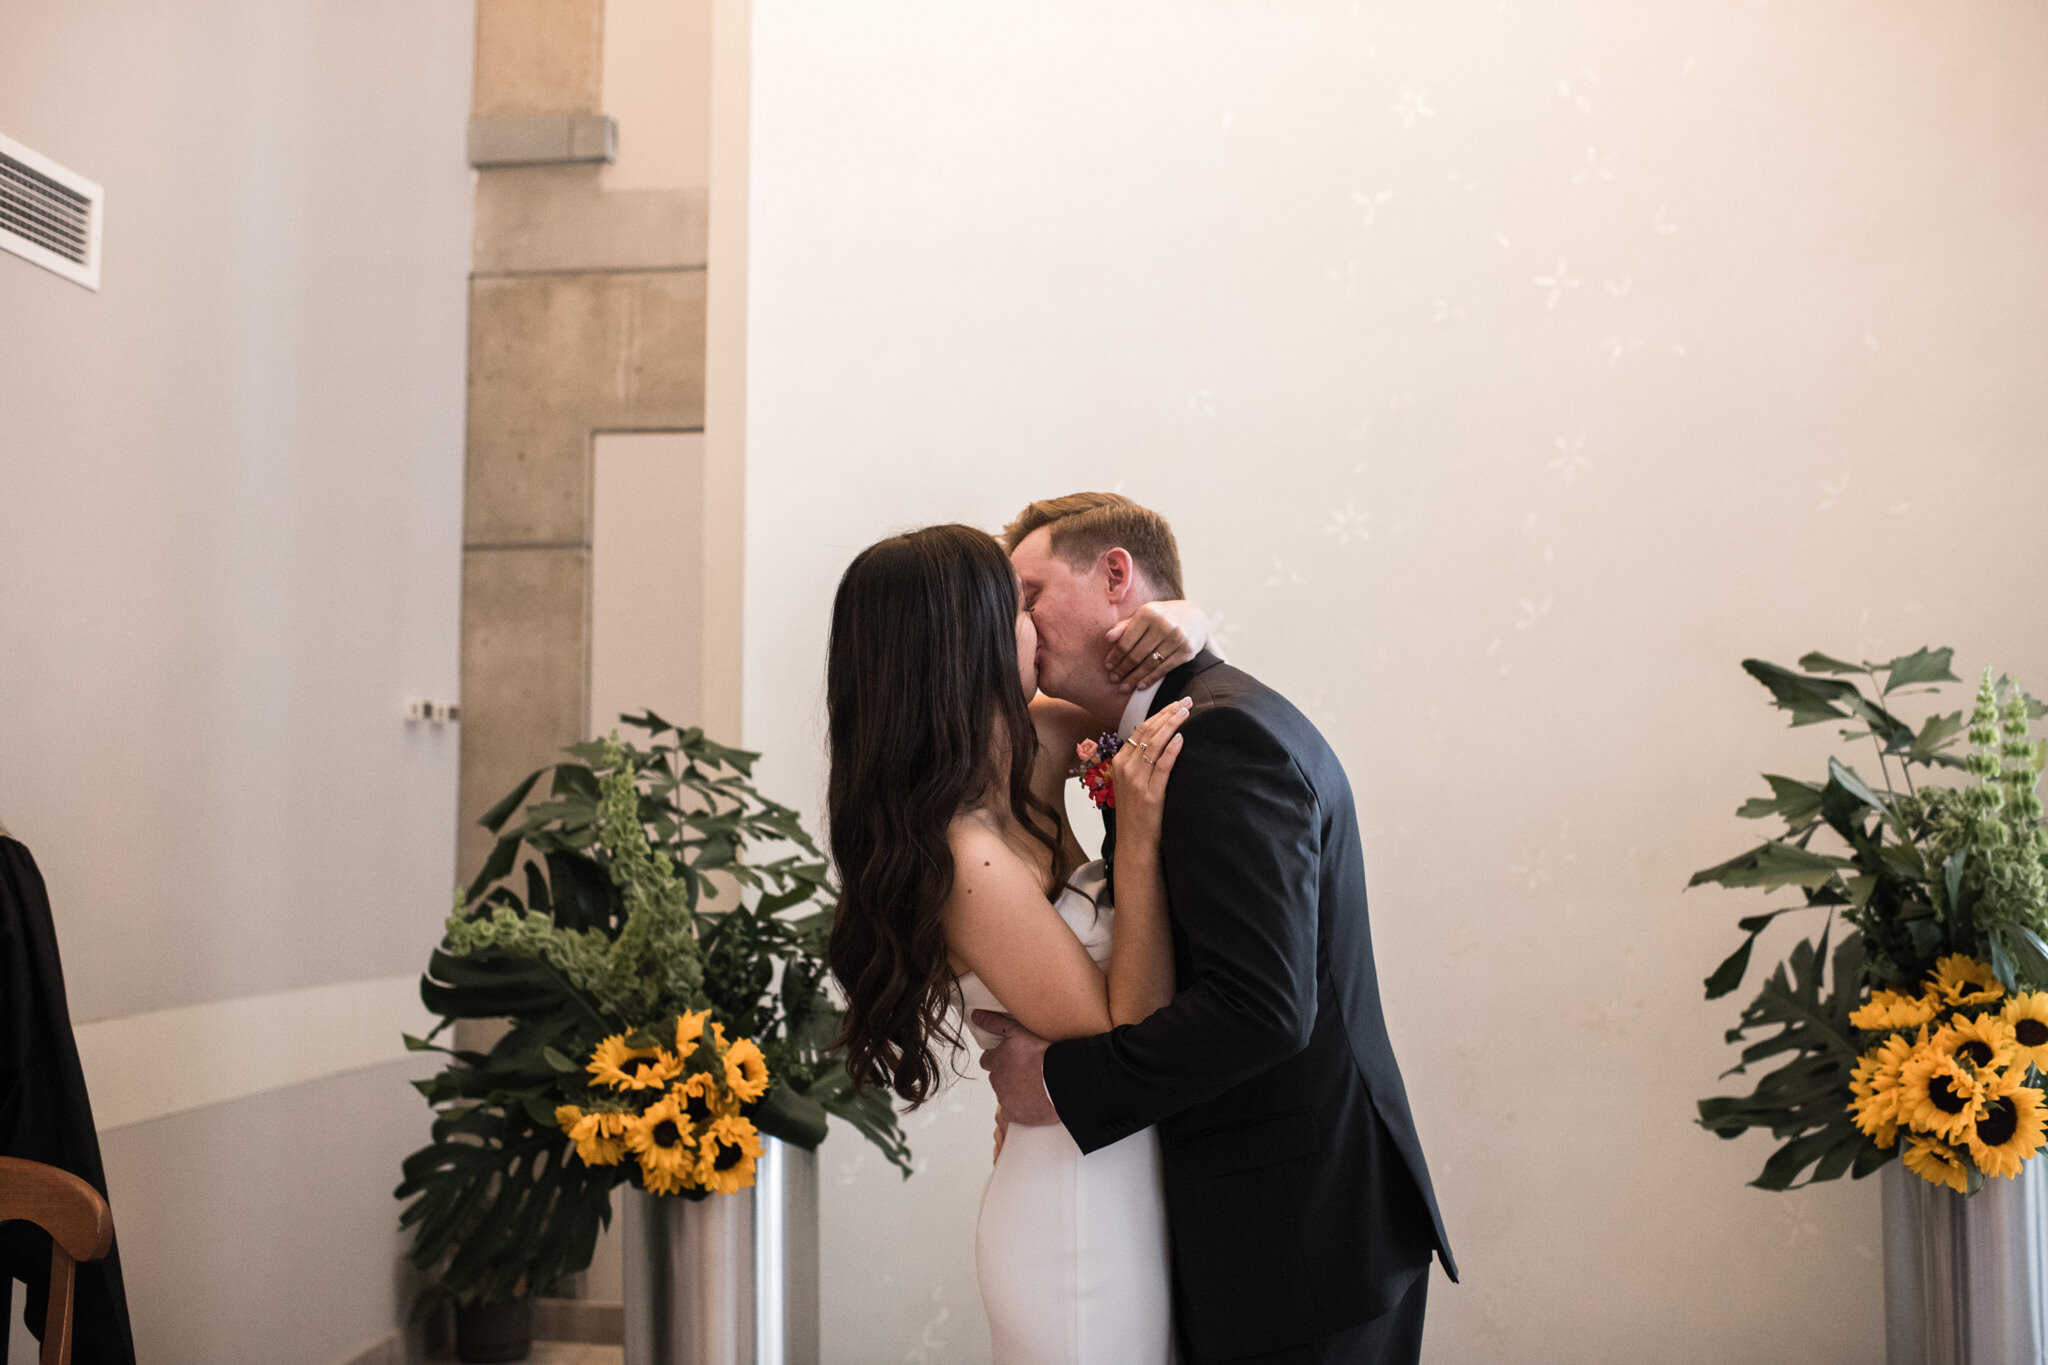 413-bride-groom-wedding-city-hall-toronto-first-kiss.jpg